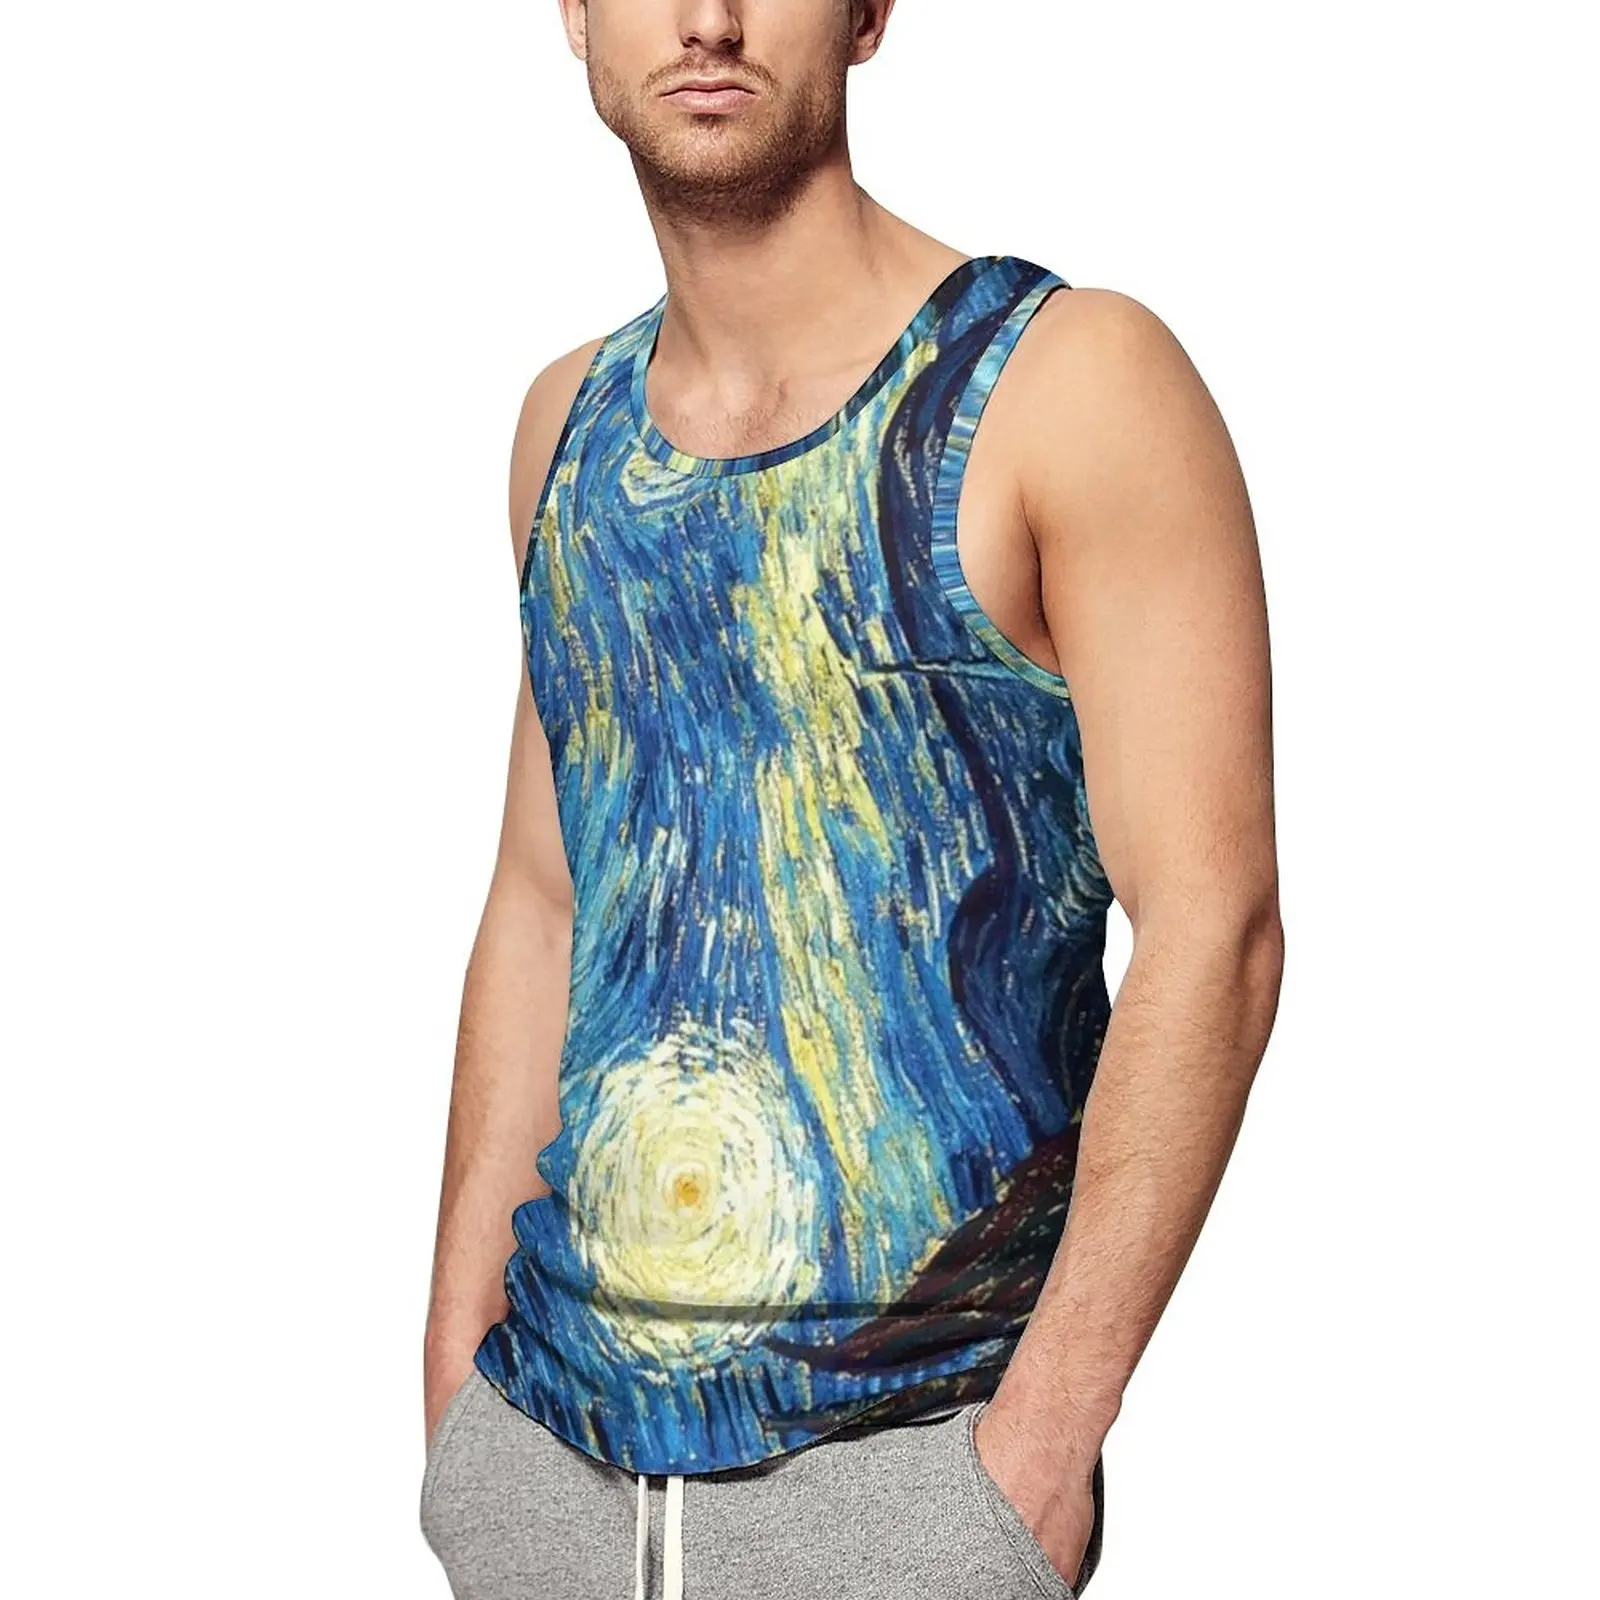 

Starry Night Tank Top Male Vincent Van Gogh Tops Beach Graphic Bodybuilding Trendy Oversize Sleeveless Shirts